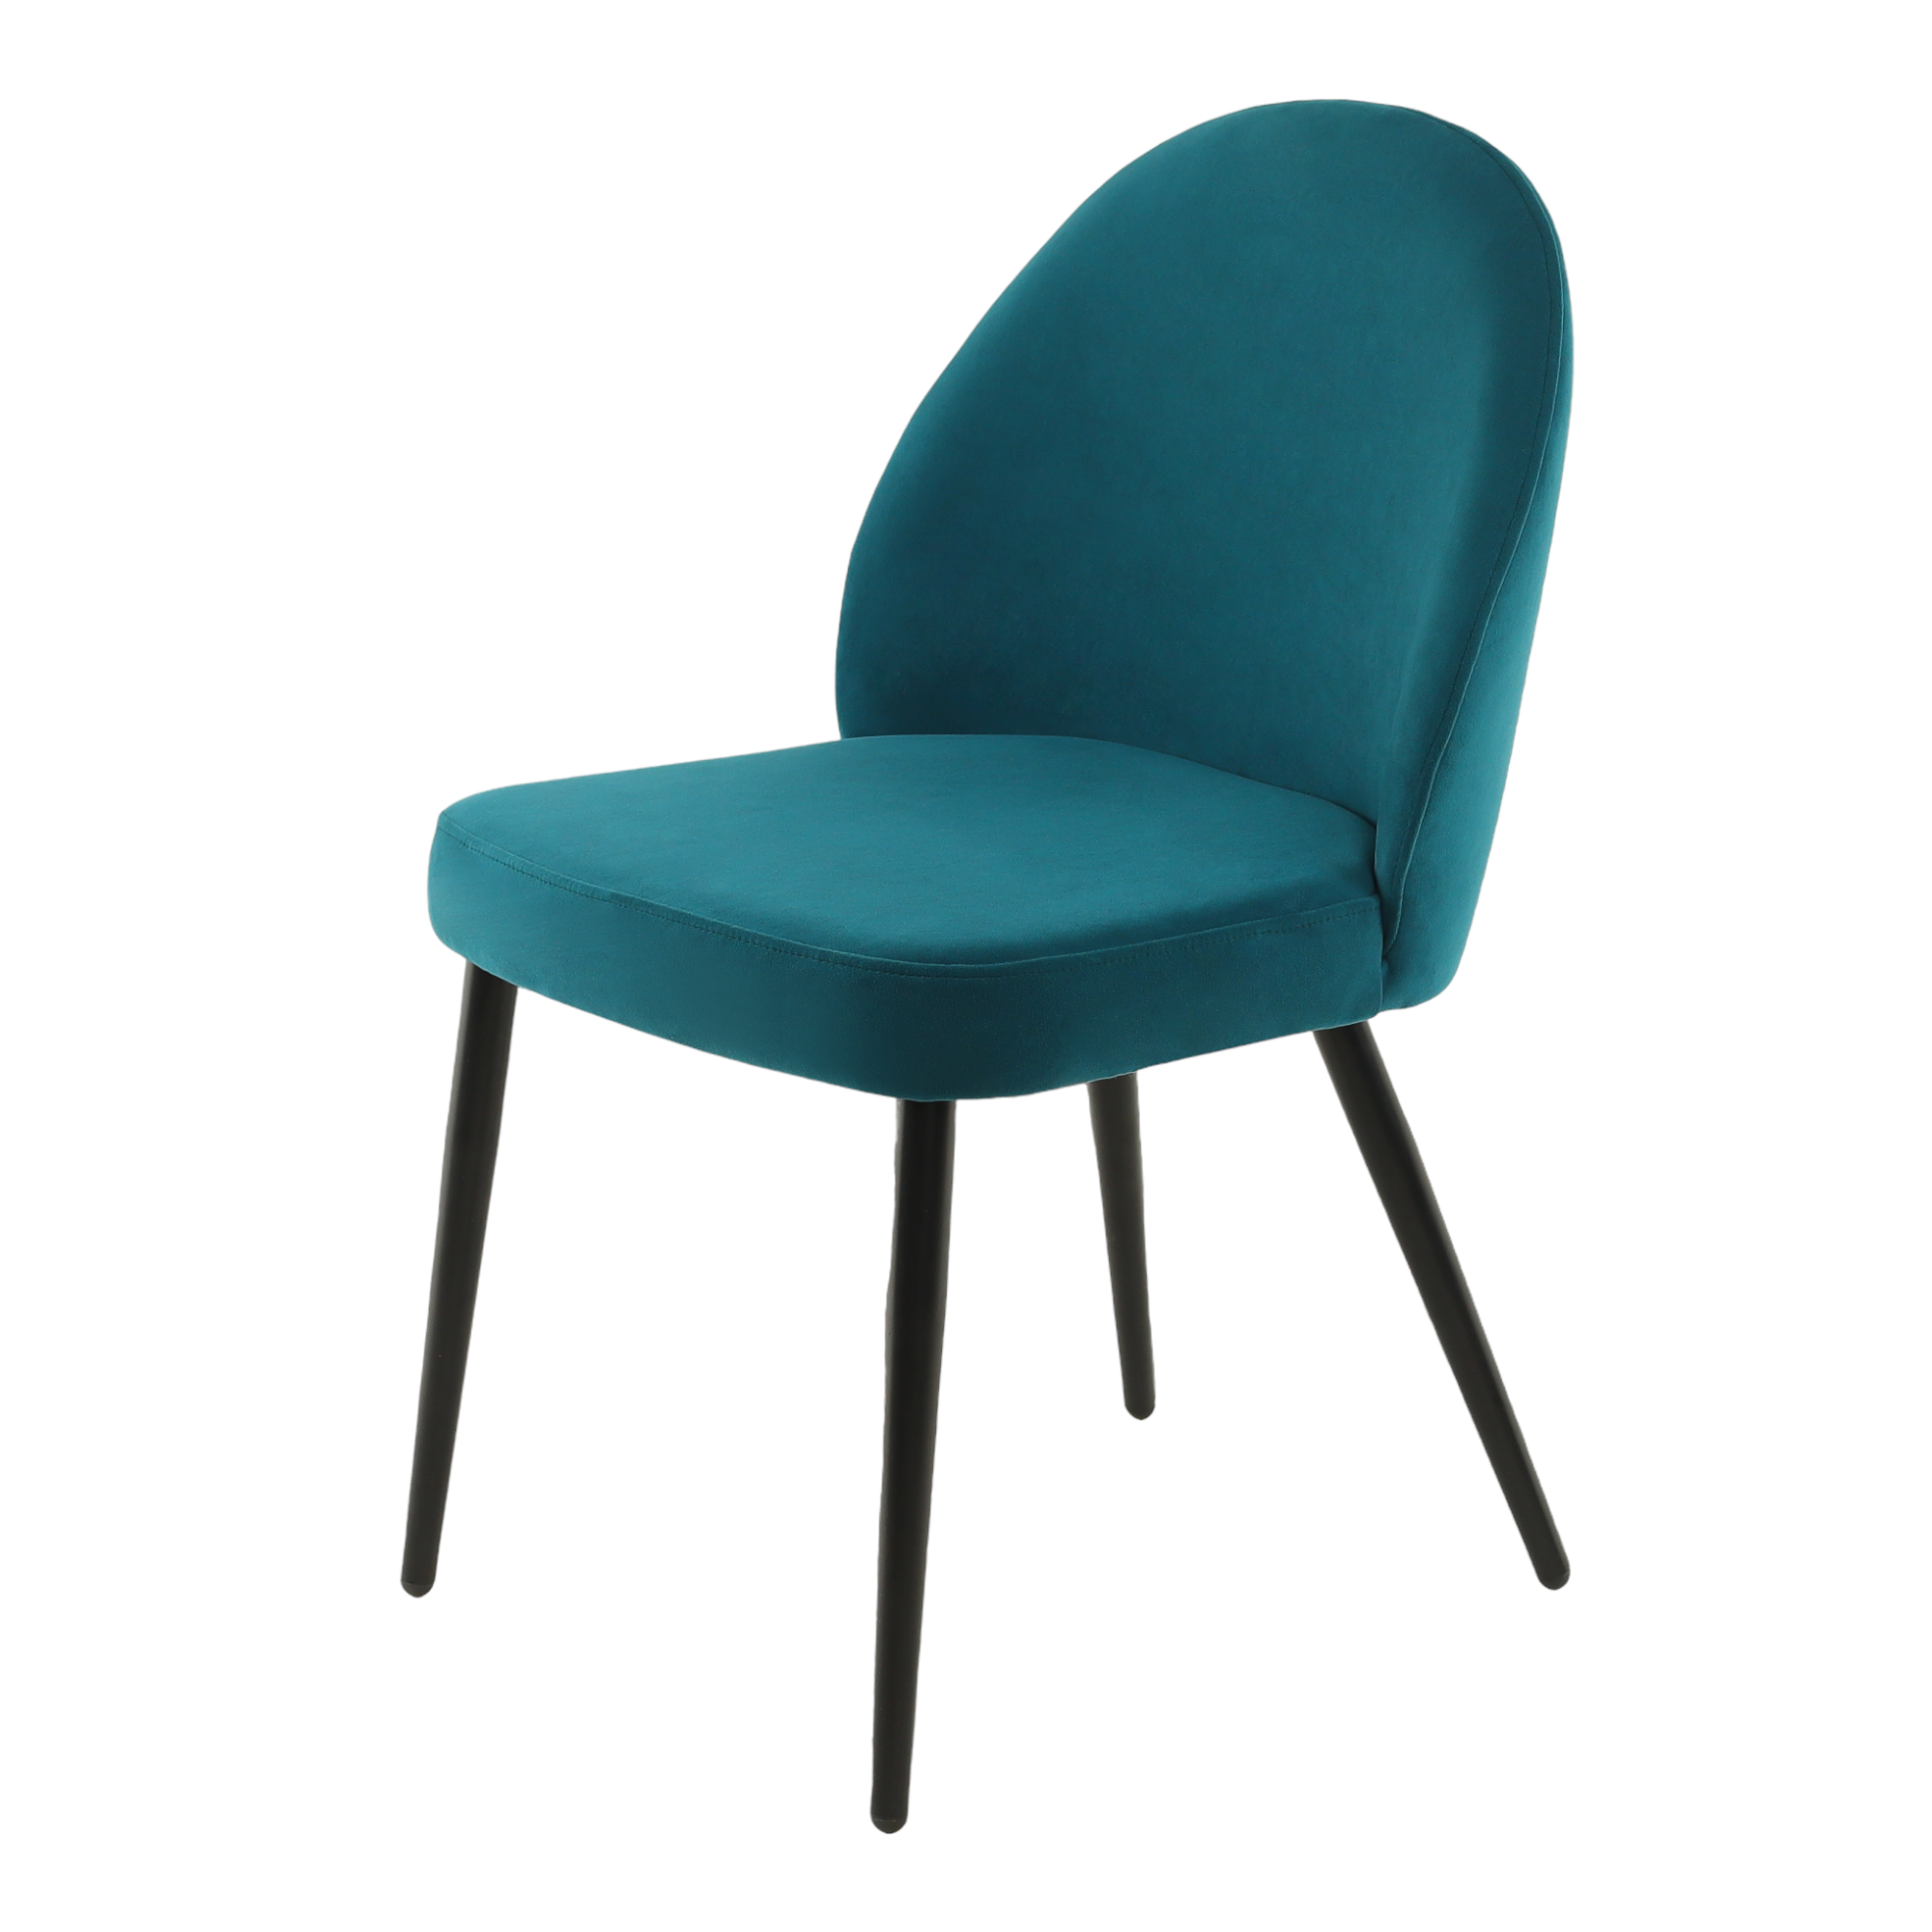 Стул для кухни Chic Chairs Jony Ocean сине-зеленый